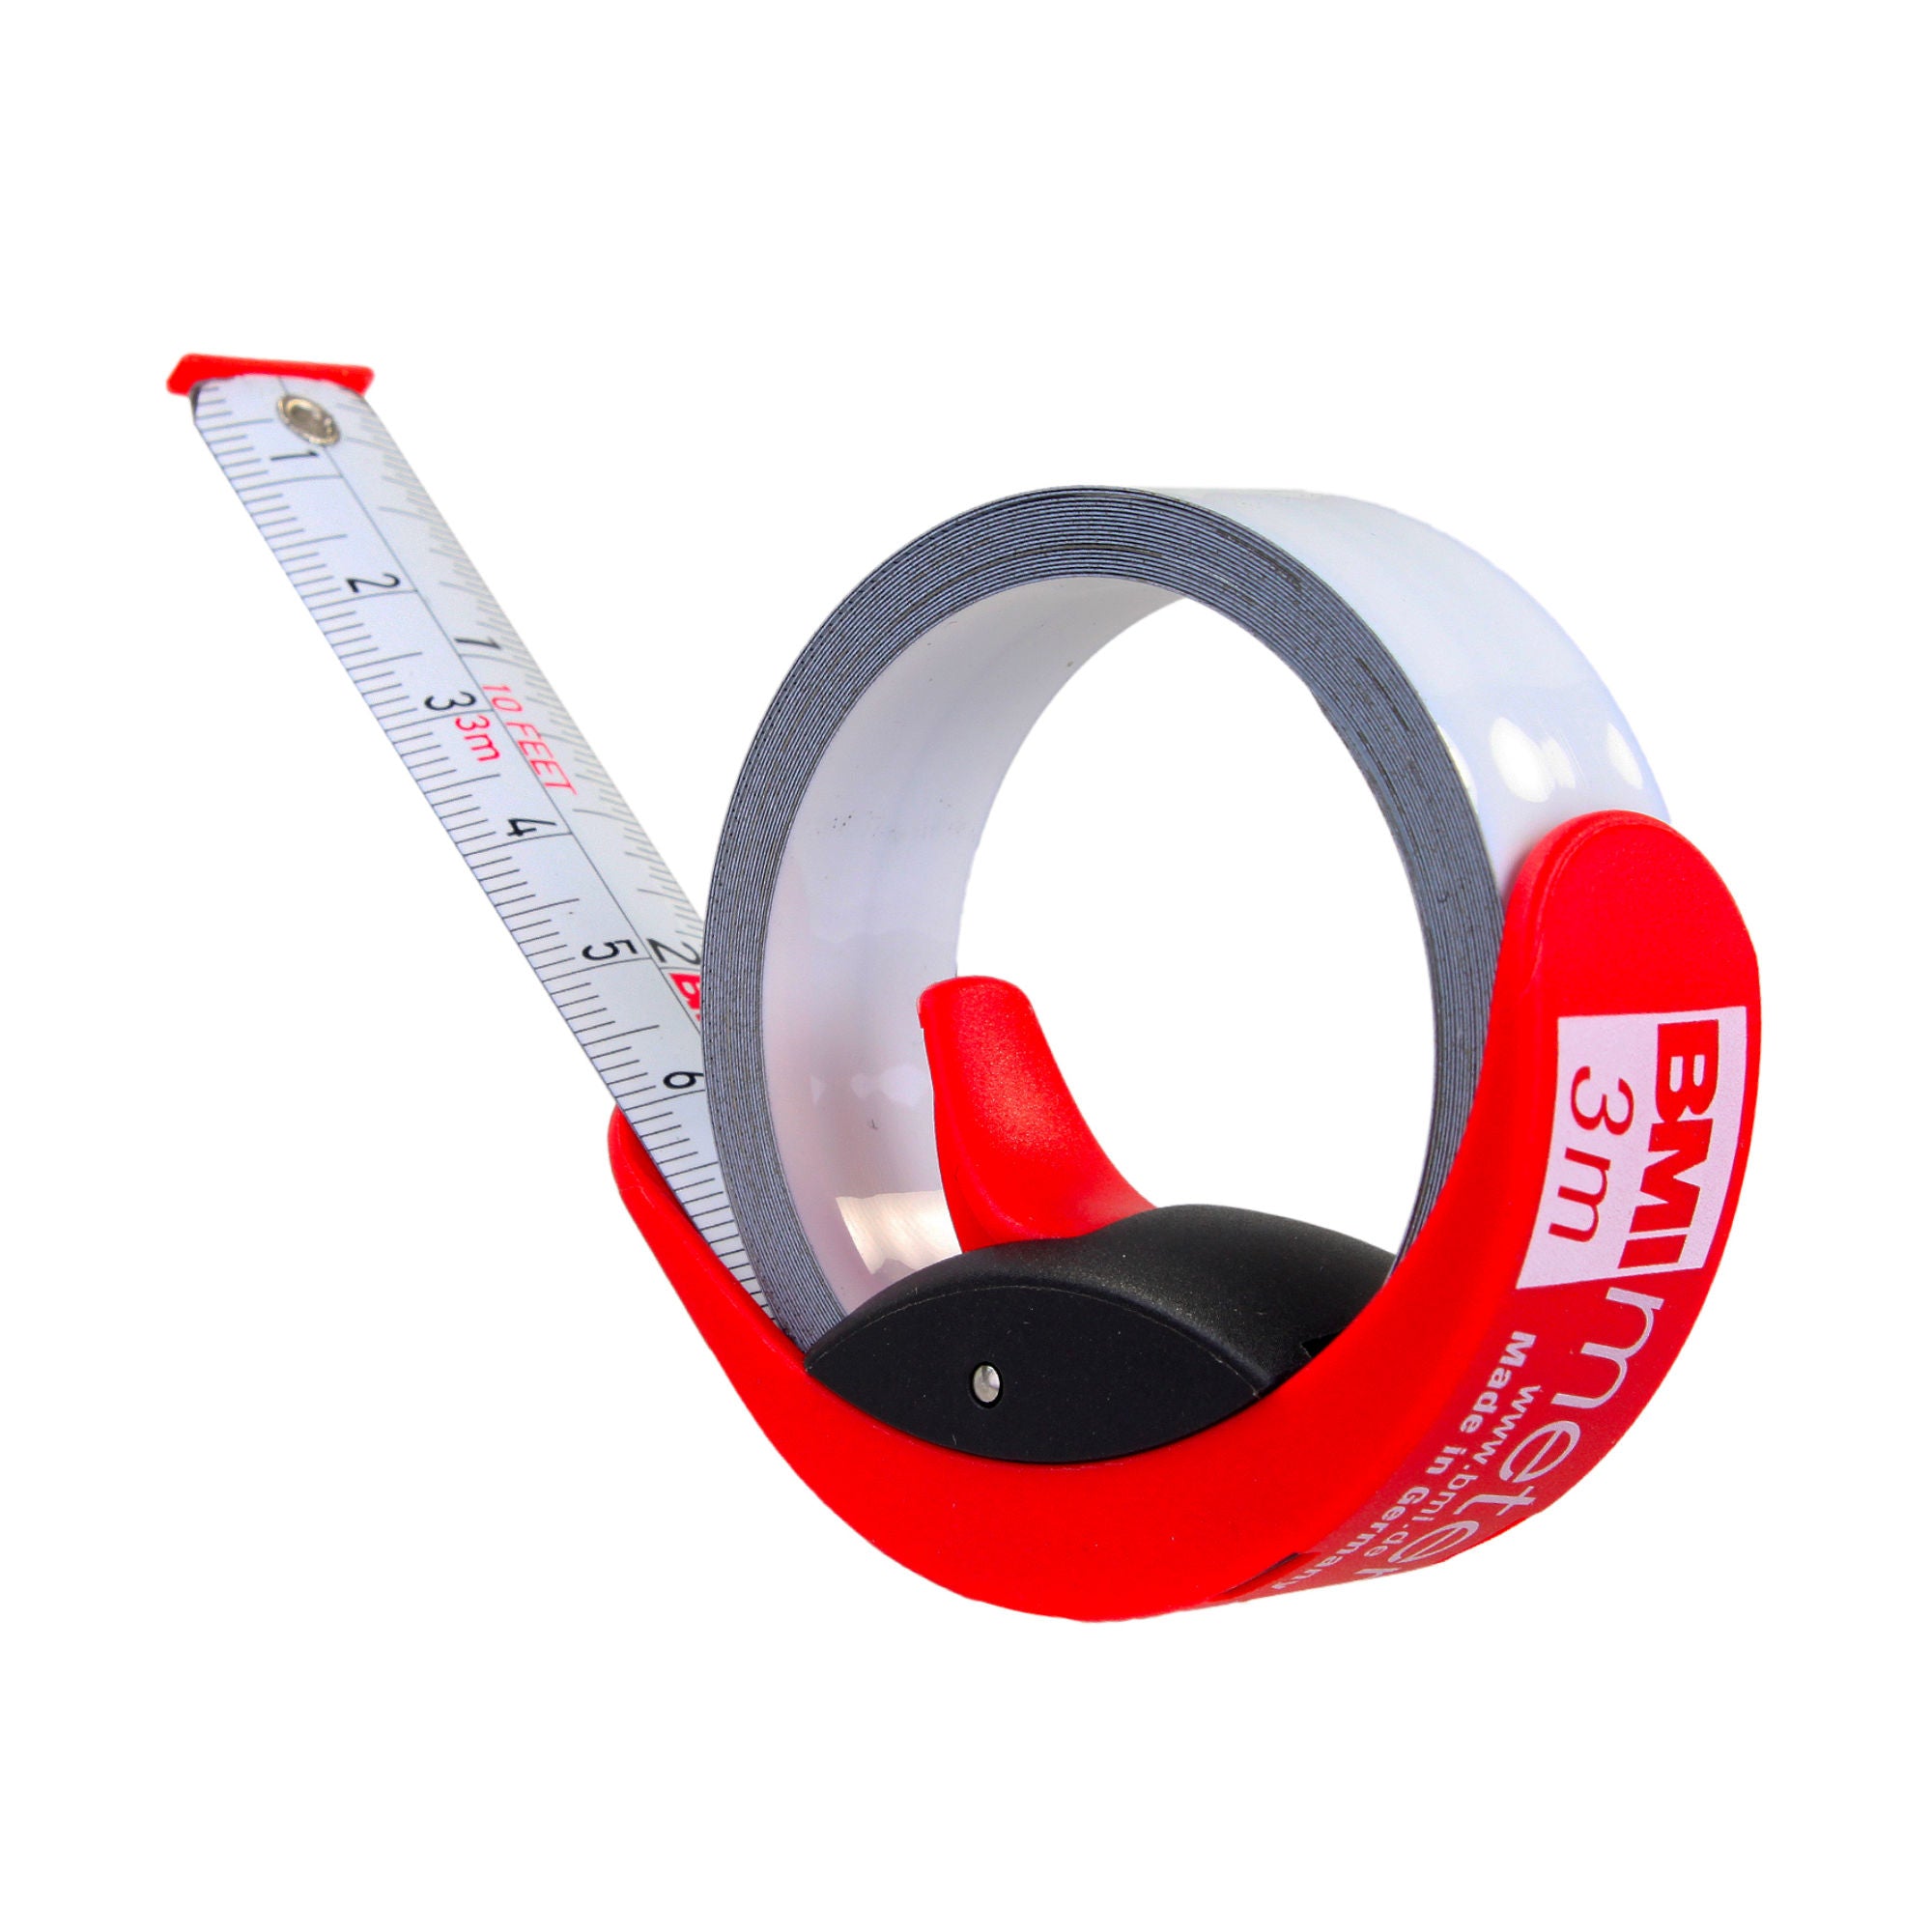 Distance Tools : BMI TwoComp 3m Pocket Tape Measures